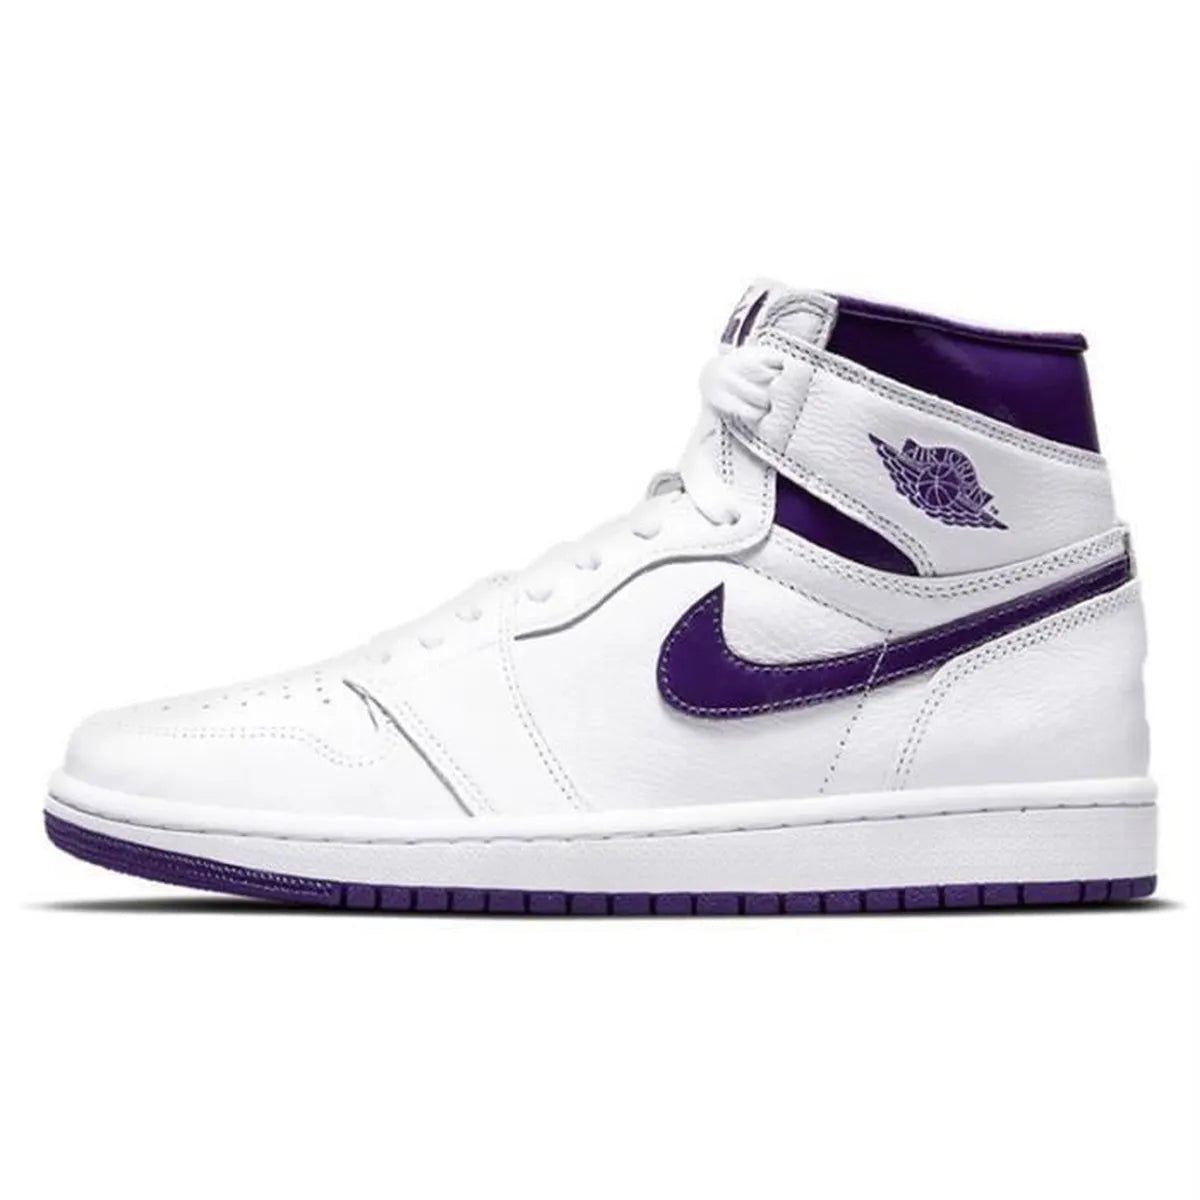 Air Jordan 1 OG "Court Purple - Enfants